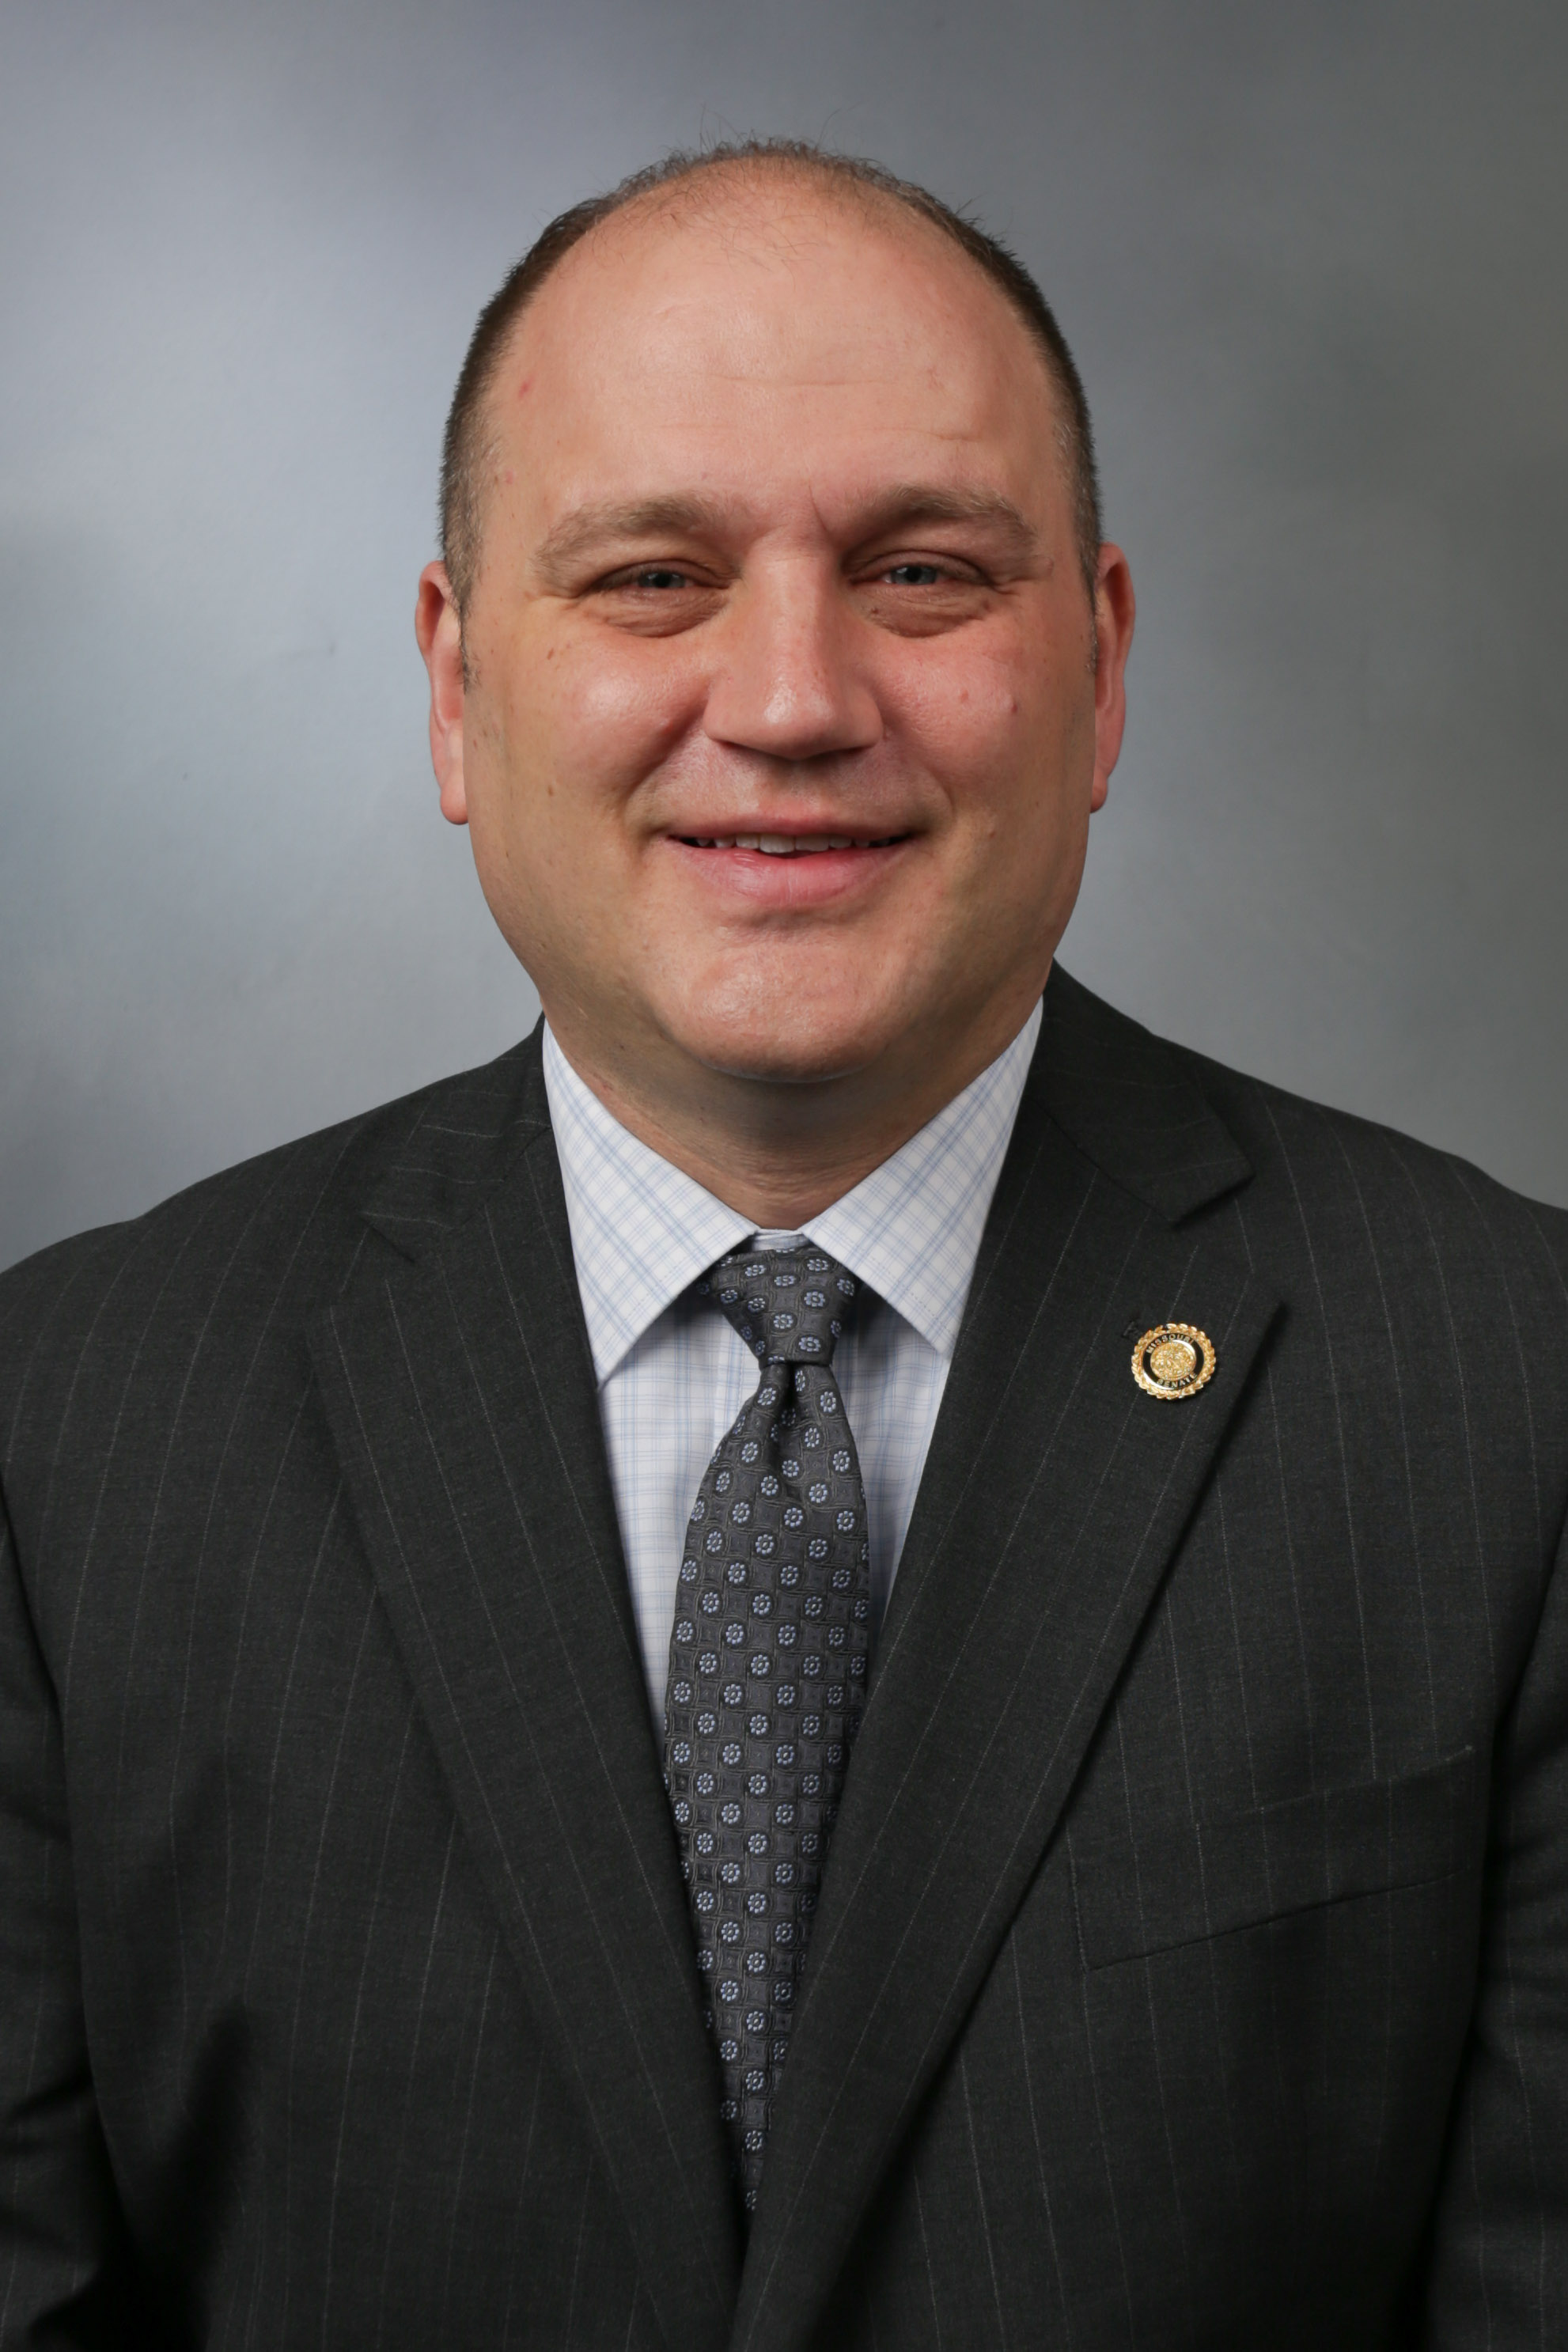 Denny Hoskins - Missouri Senate